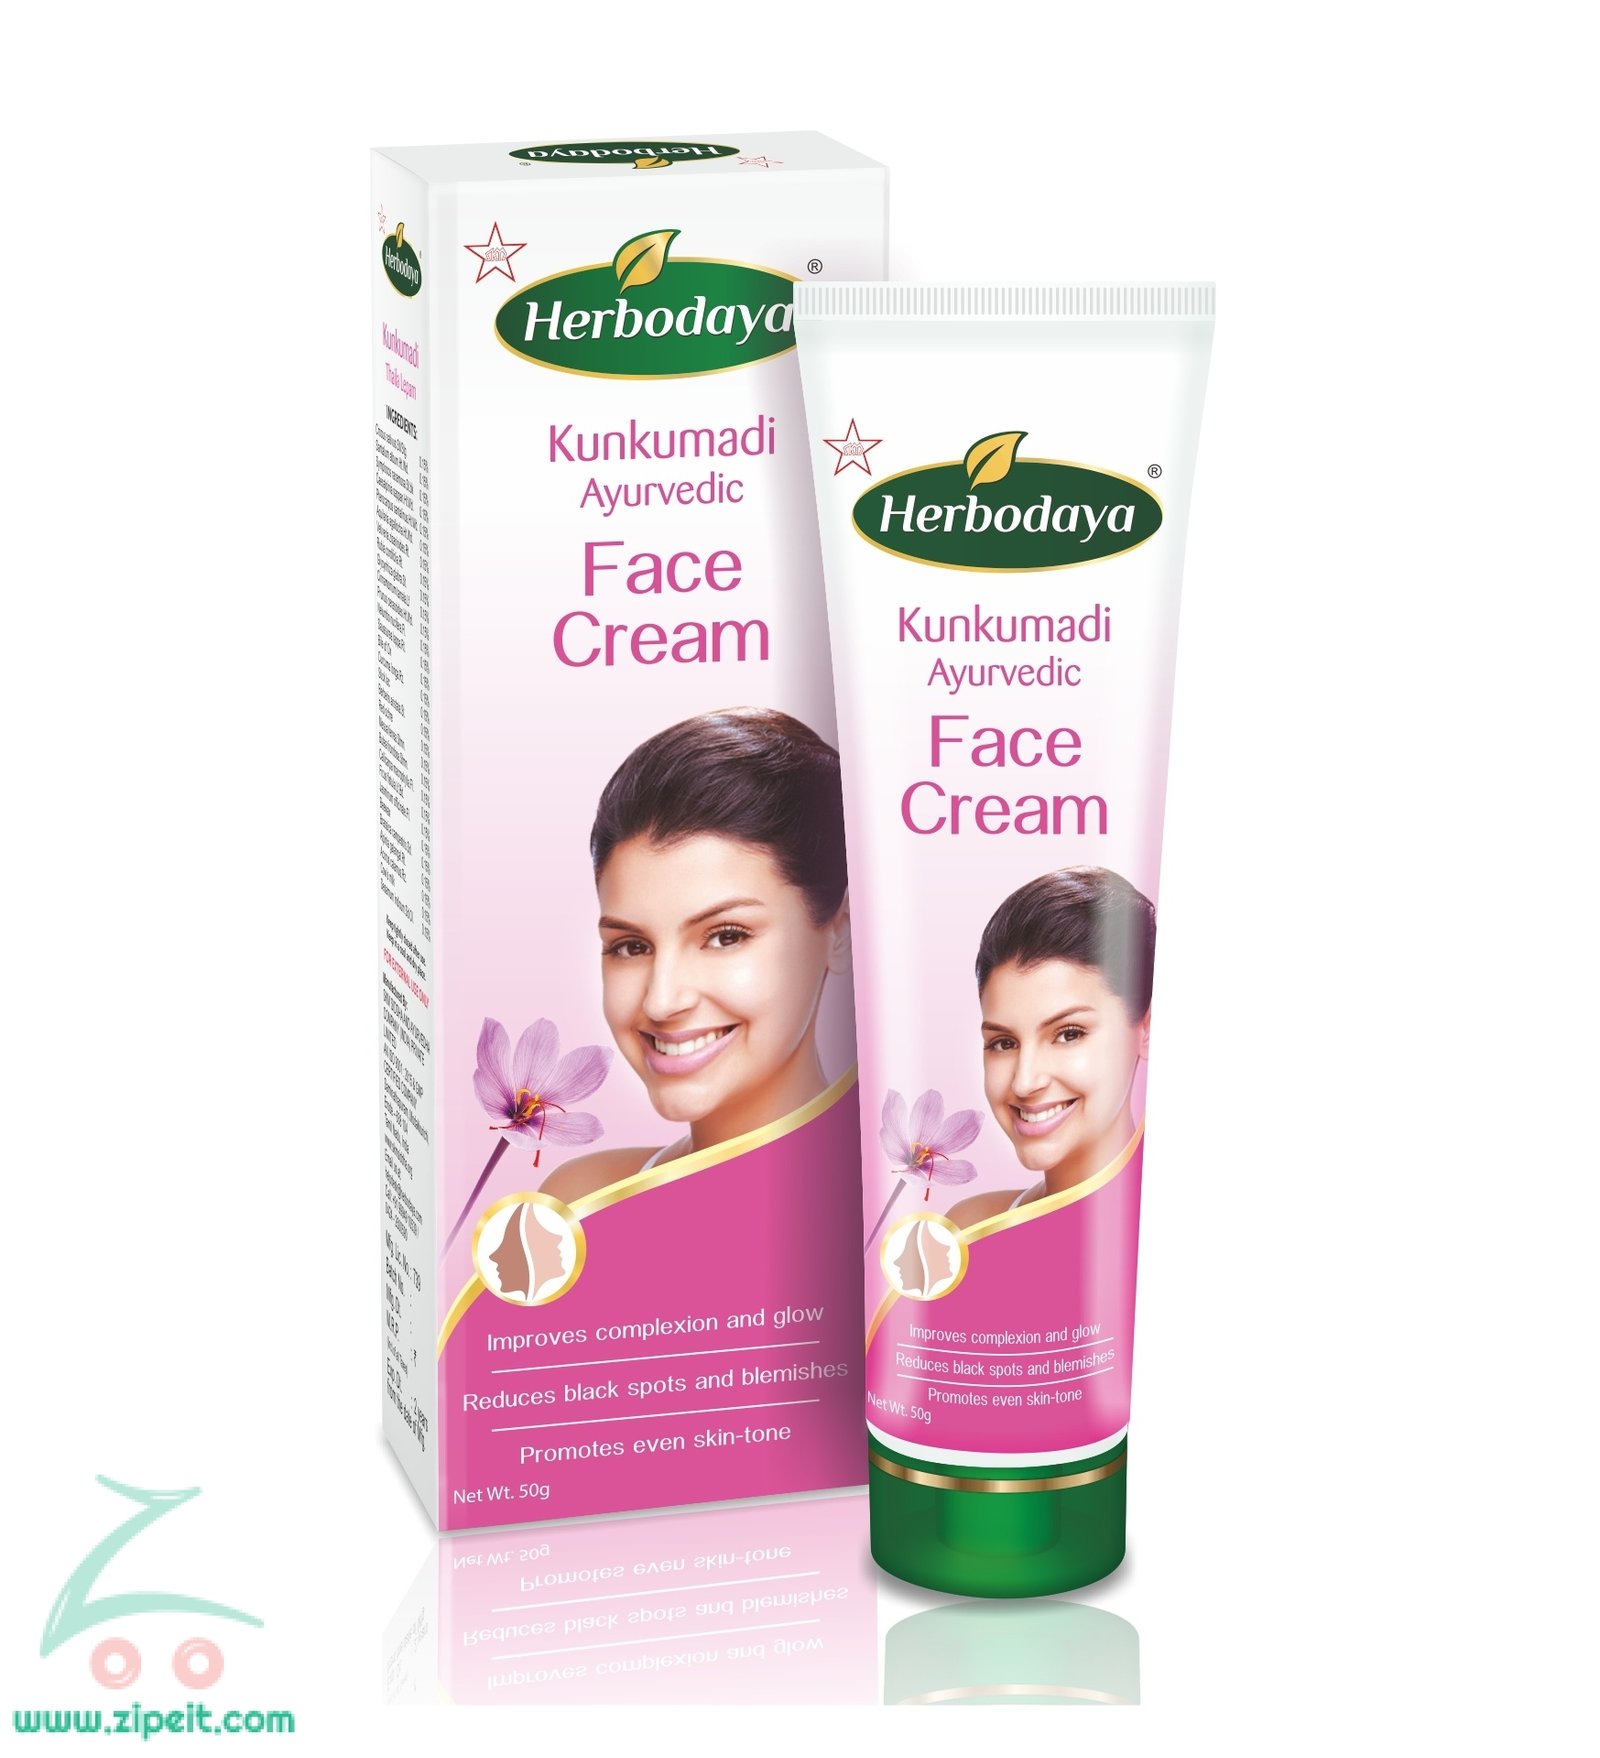 Herbodaya - Kunkumadi Face Cream - 50g